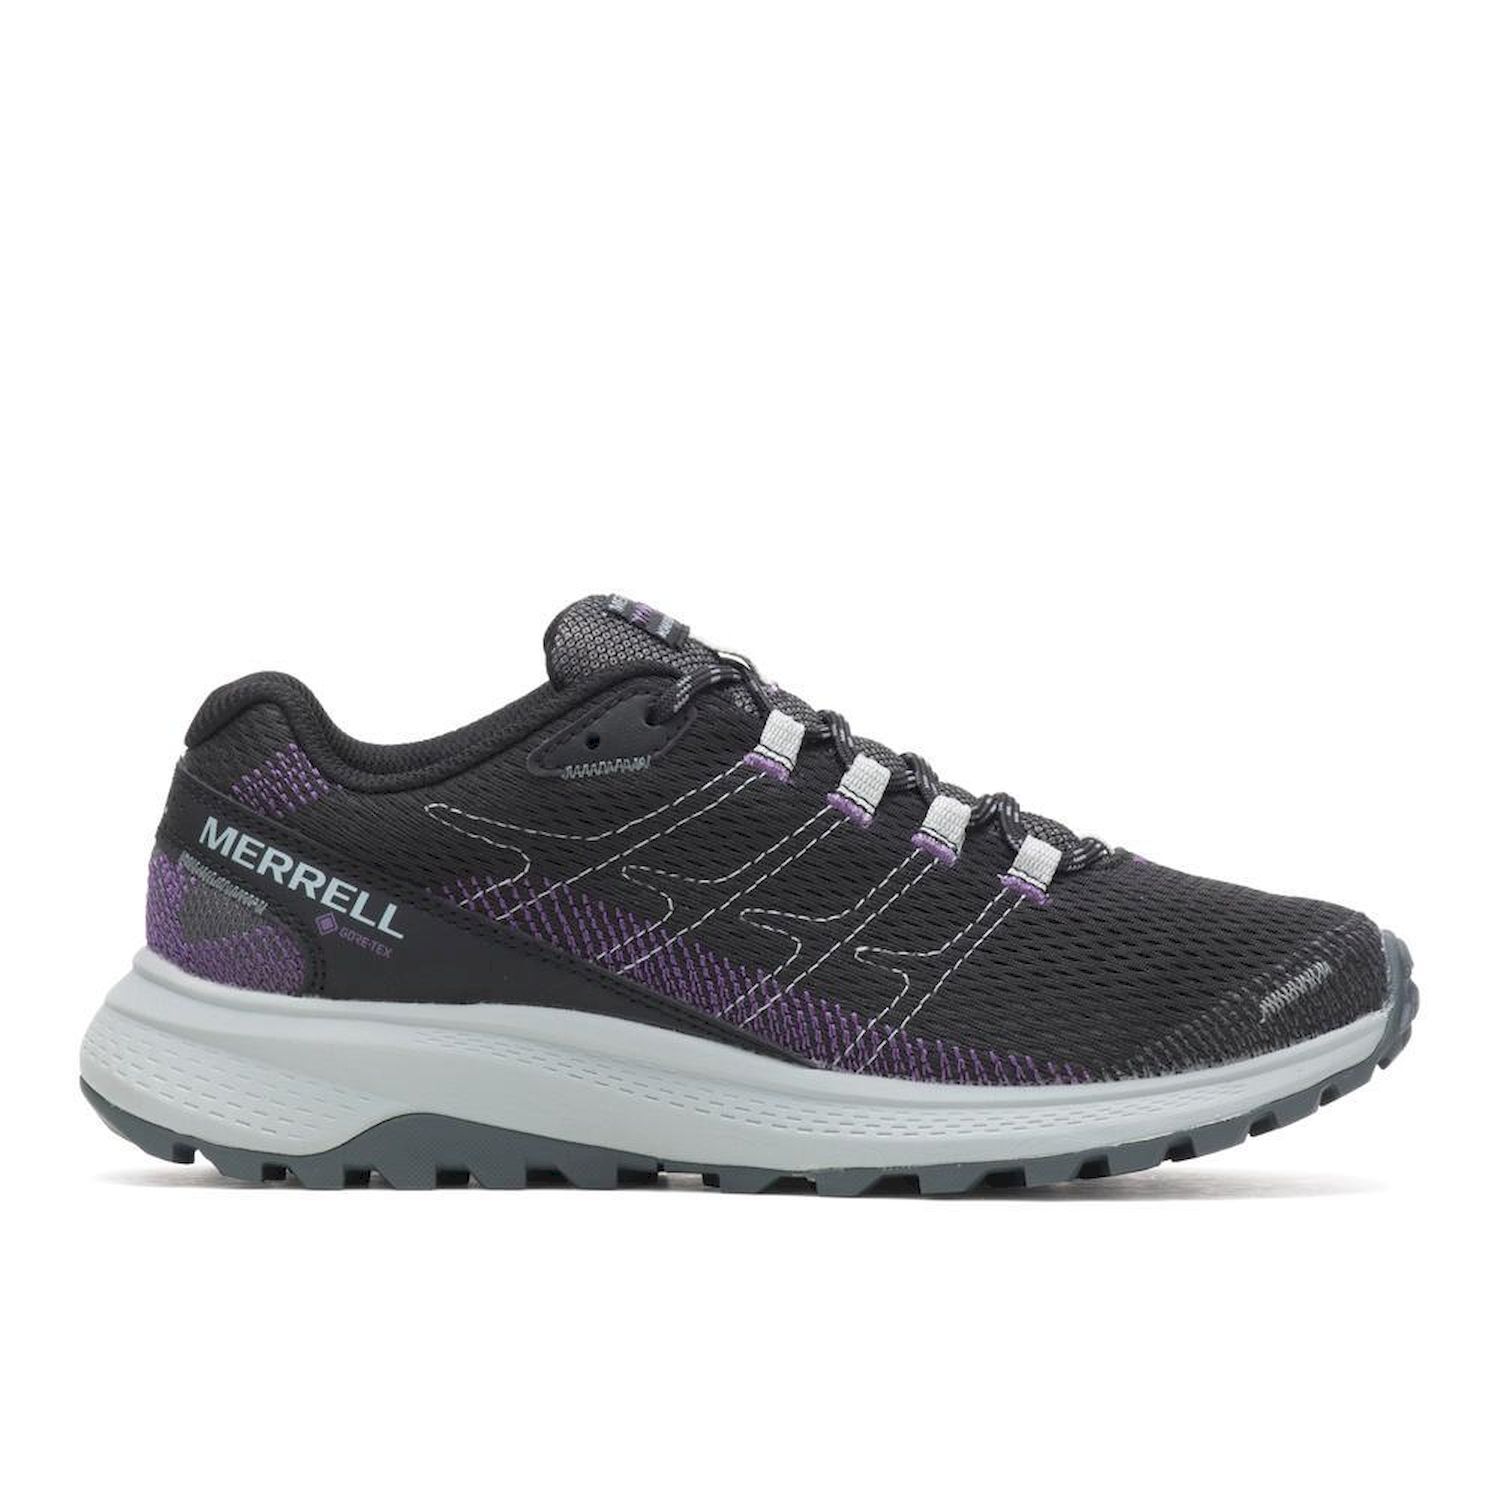 Merrell Fly Strike GTX - Trail running shoes - Women's